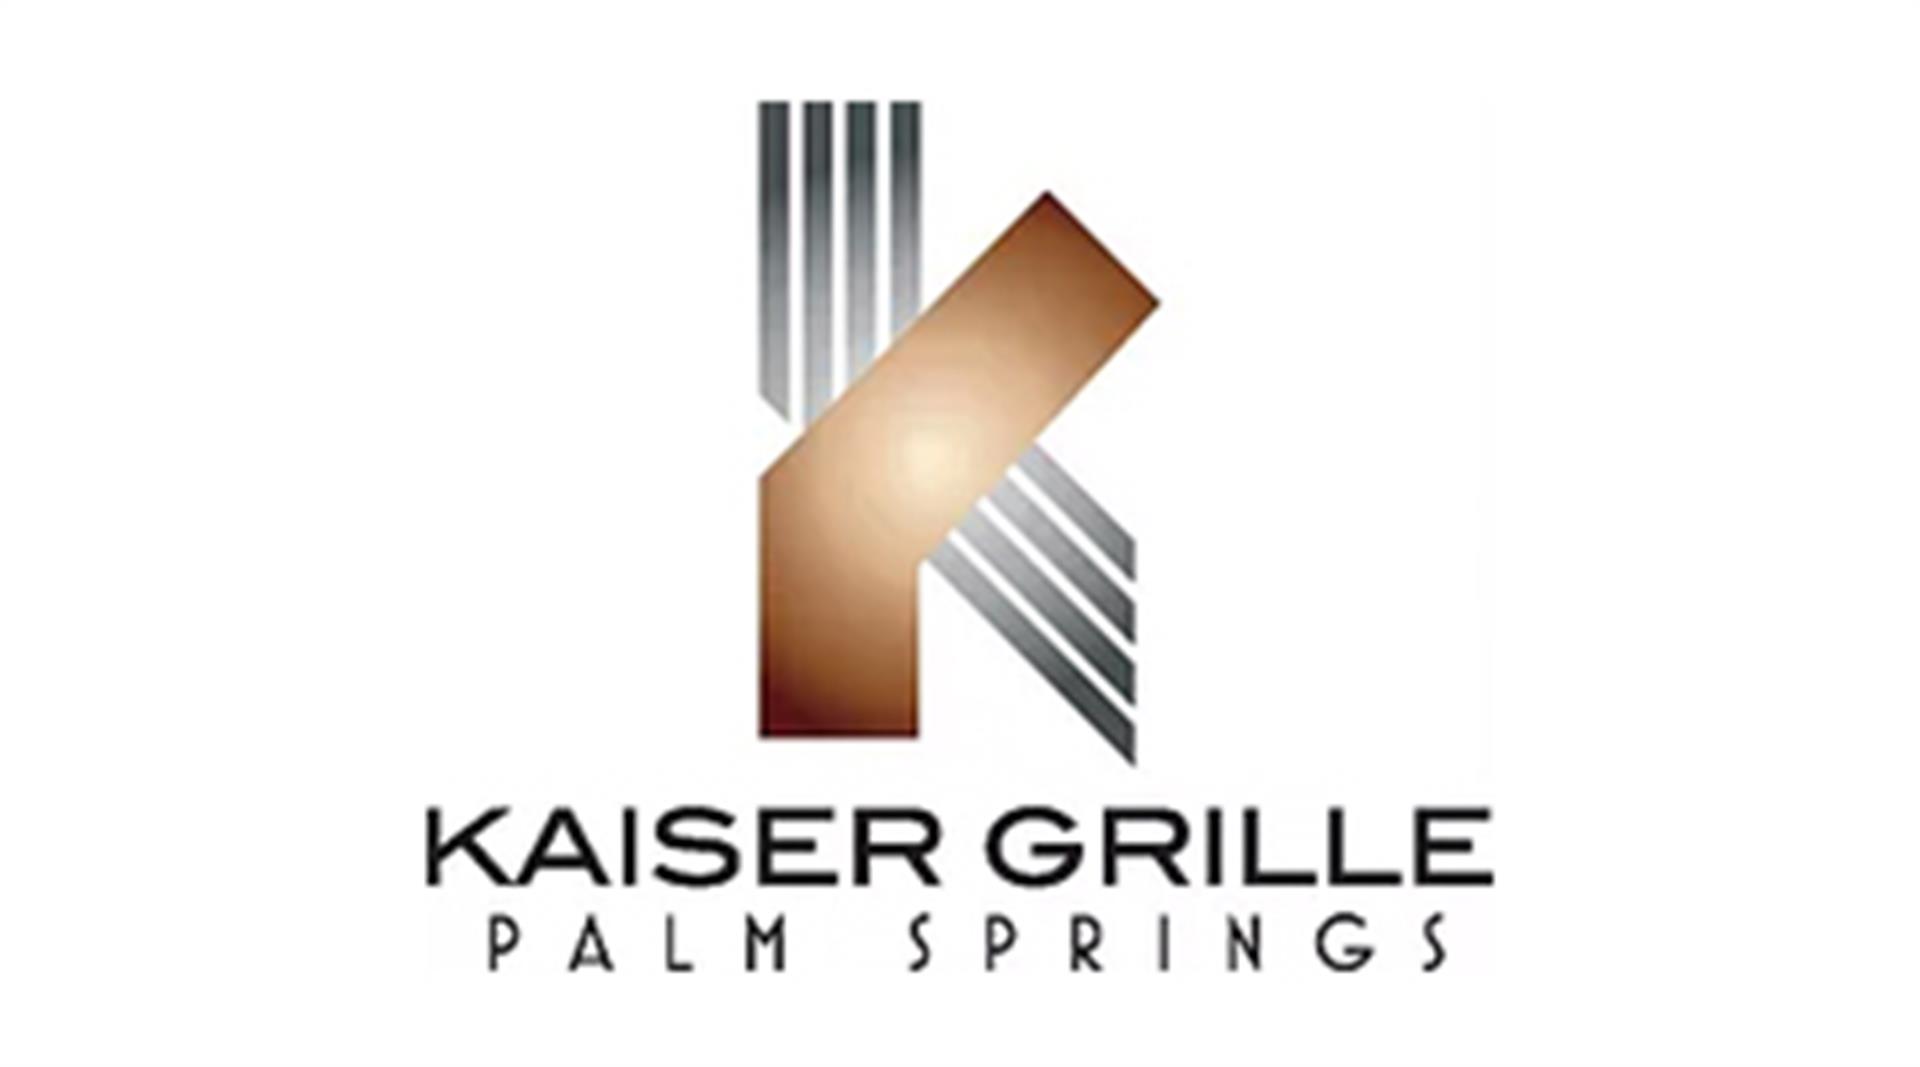 palm_springs_kaiser_grille